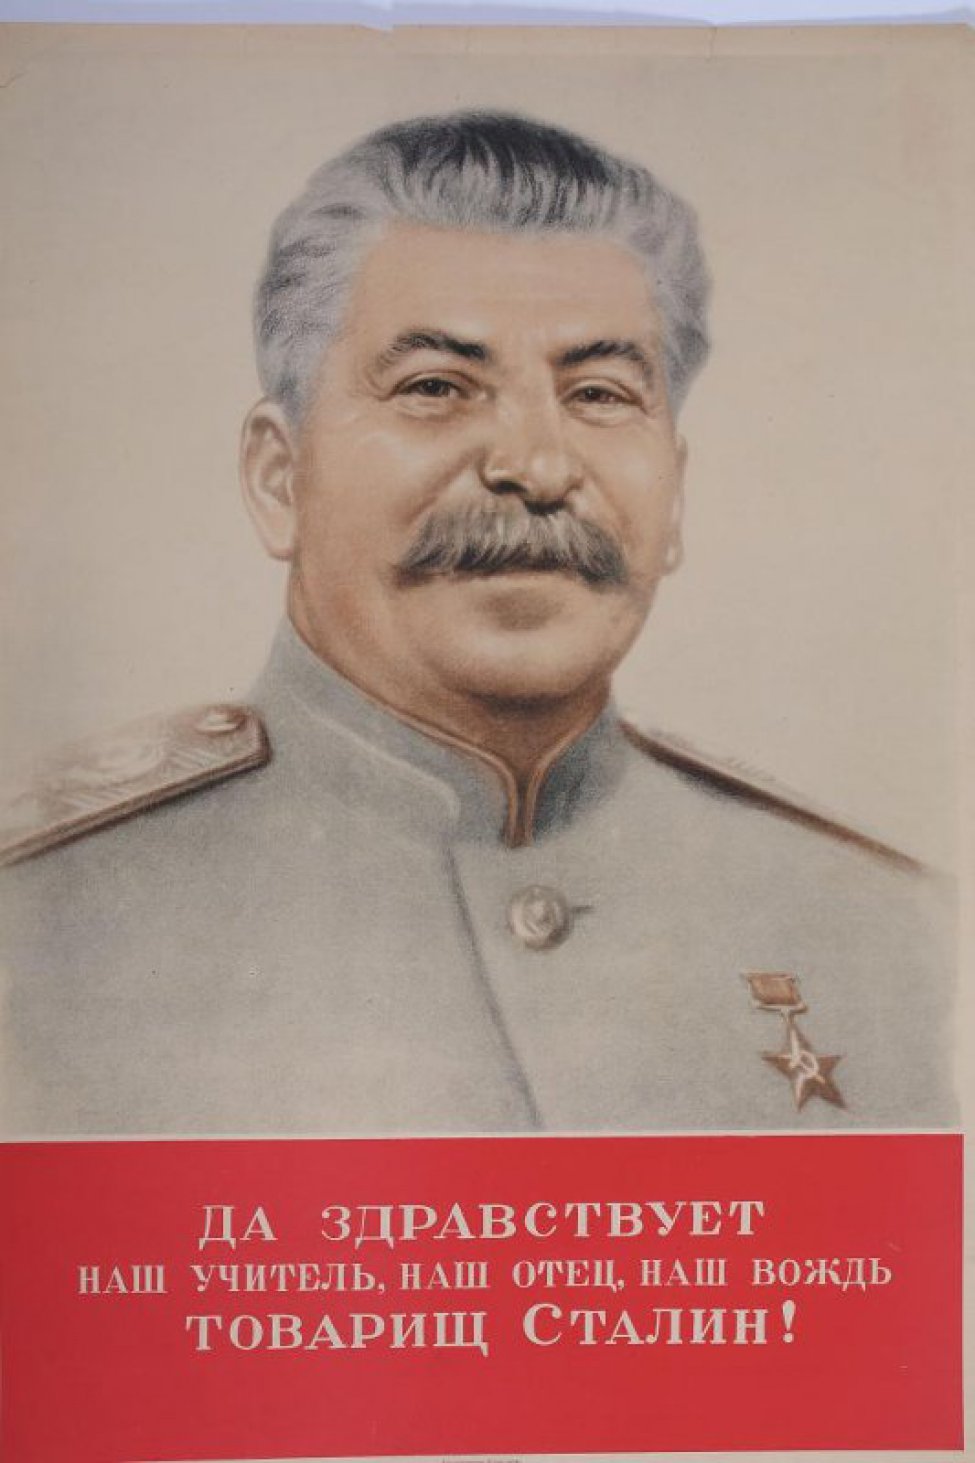 Изображен портрет Сталина погрудно обращен к зрителю один в кителе с погонами и звездой на груди.